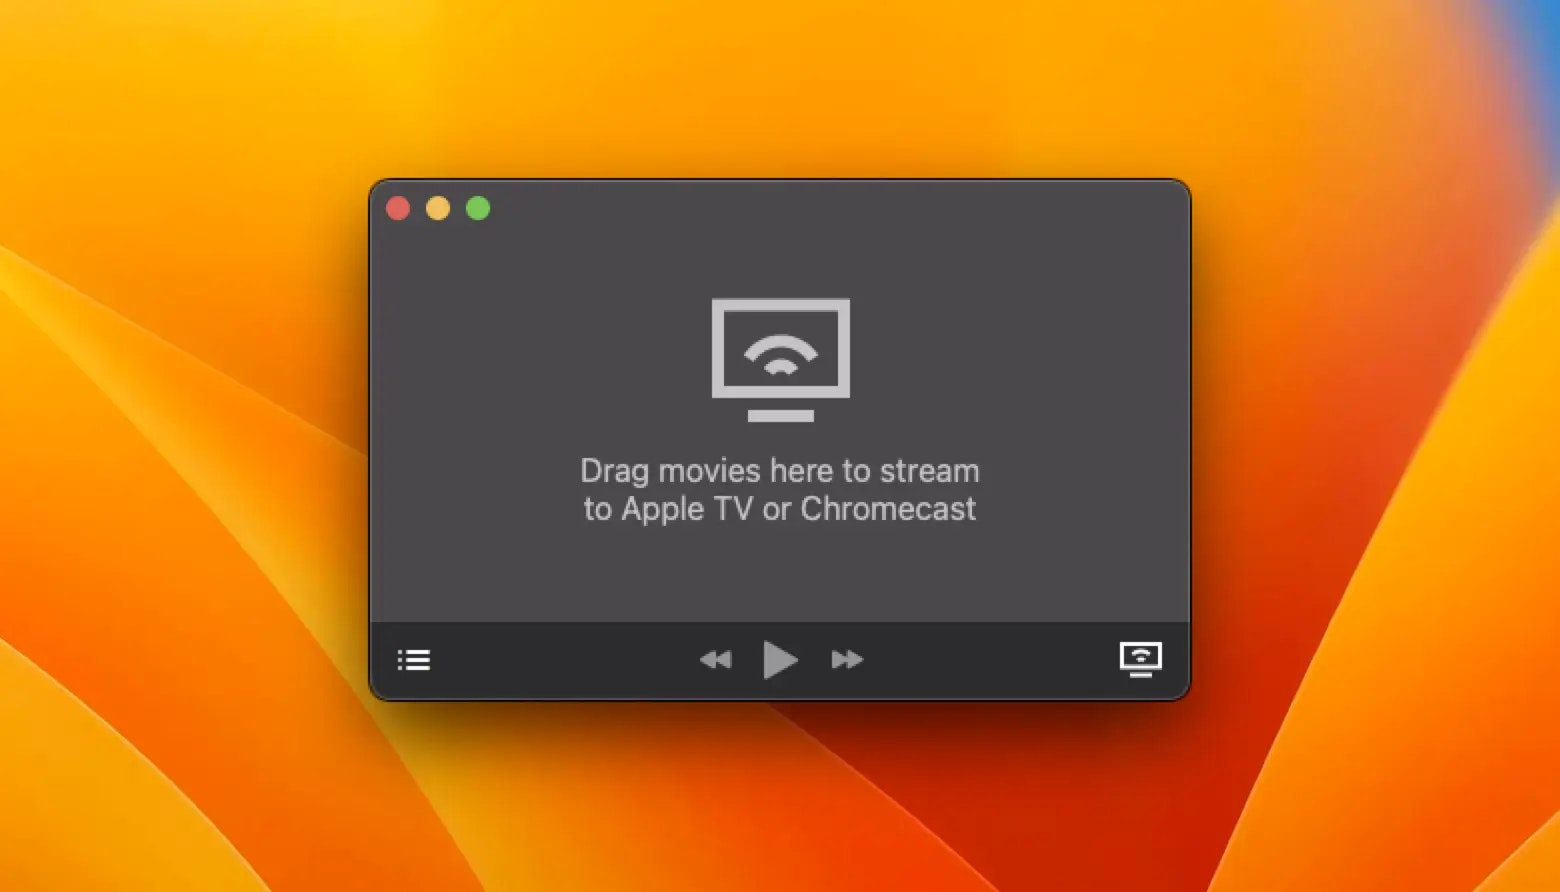 Drag movies to stream to Apple TV or Chromecast